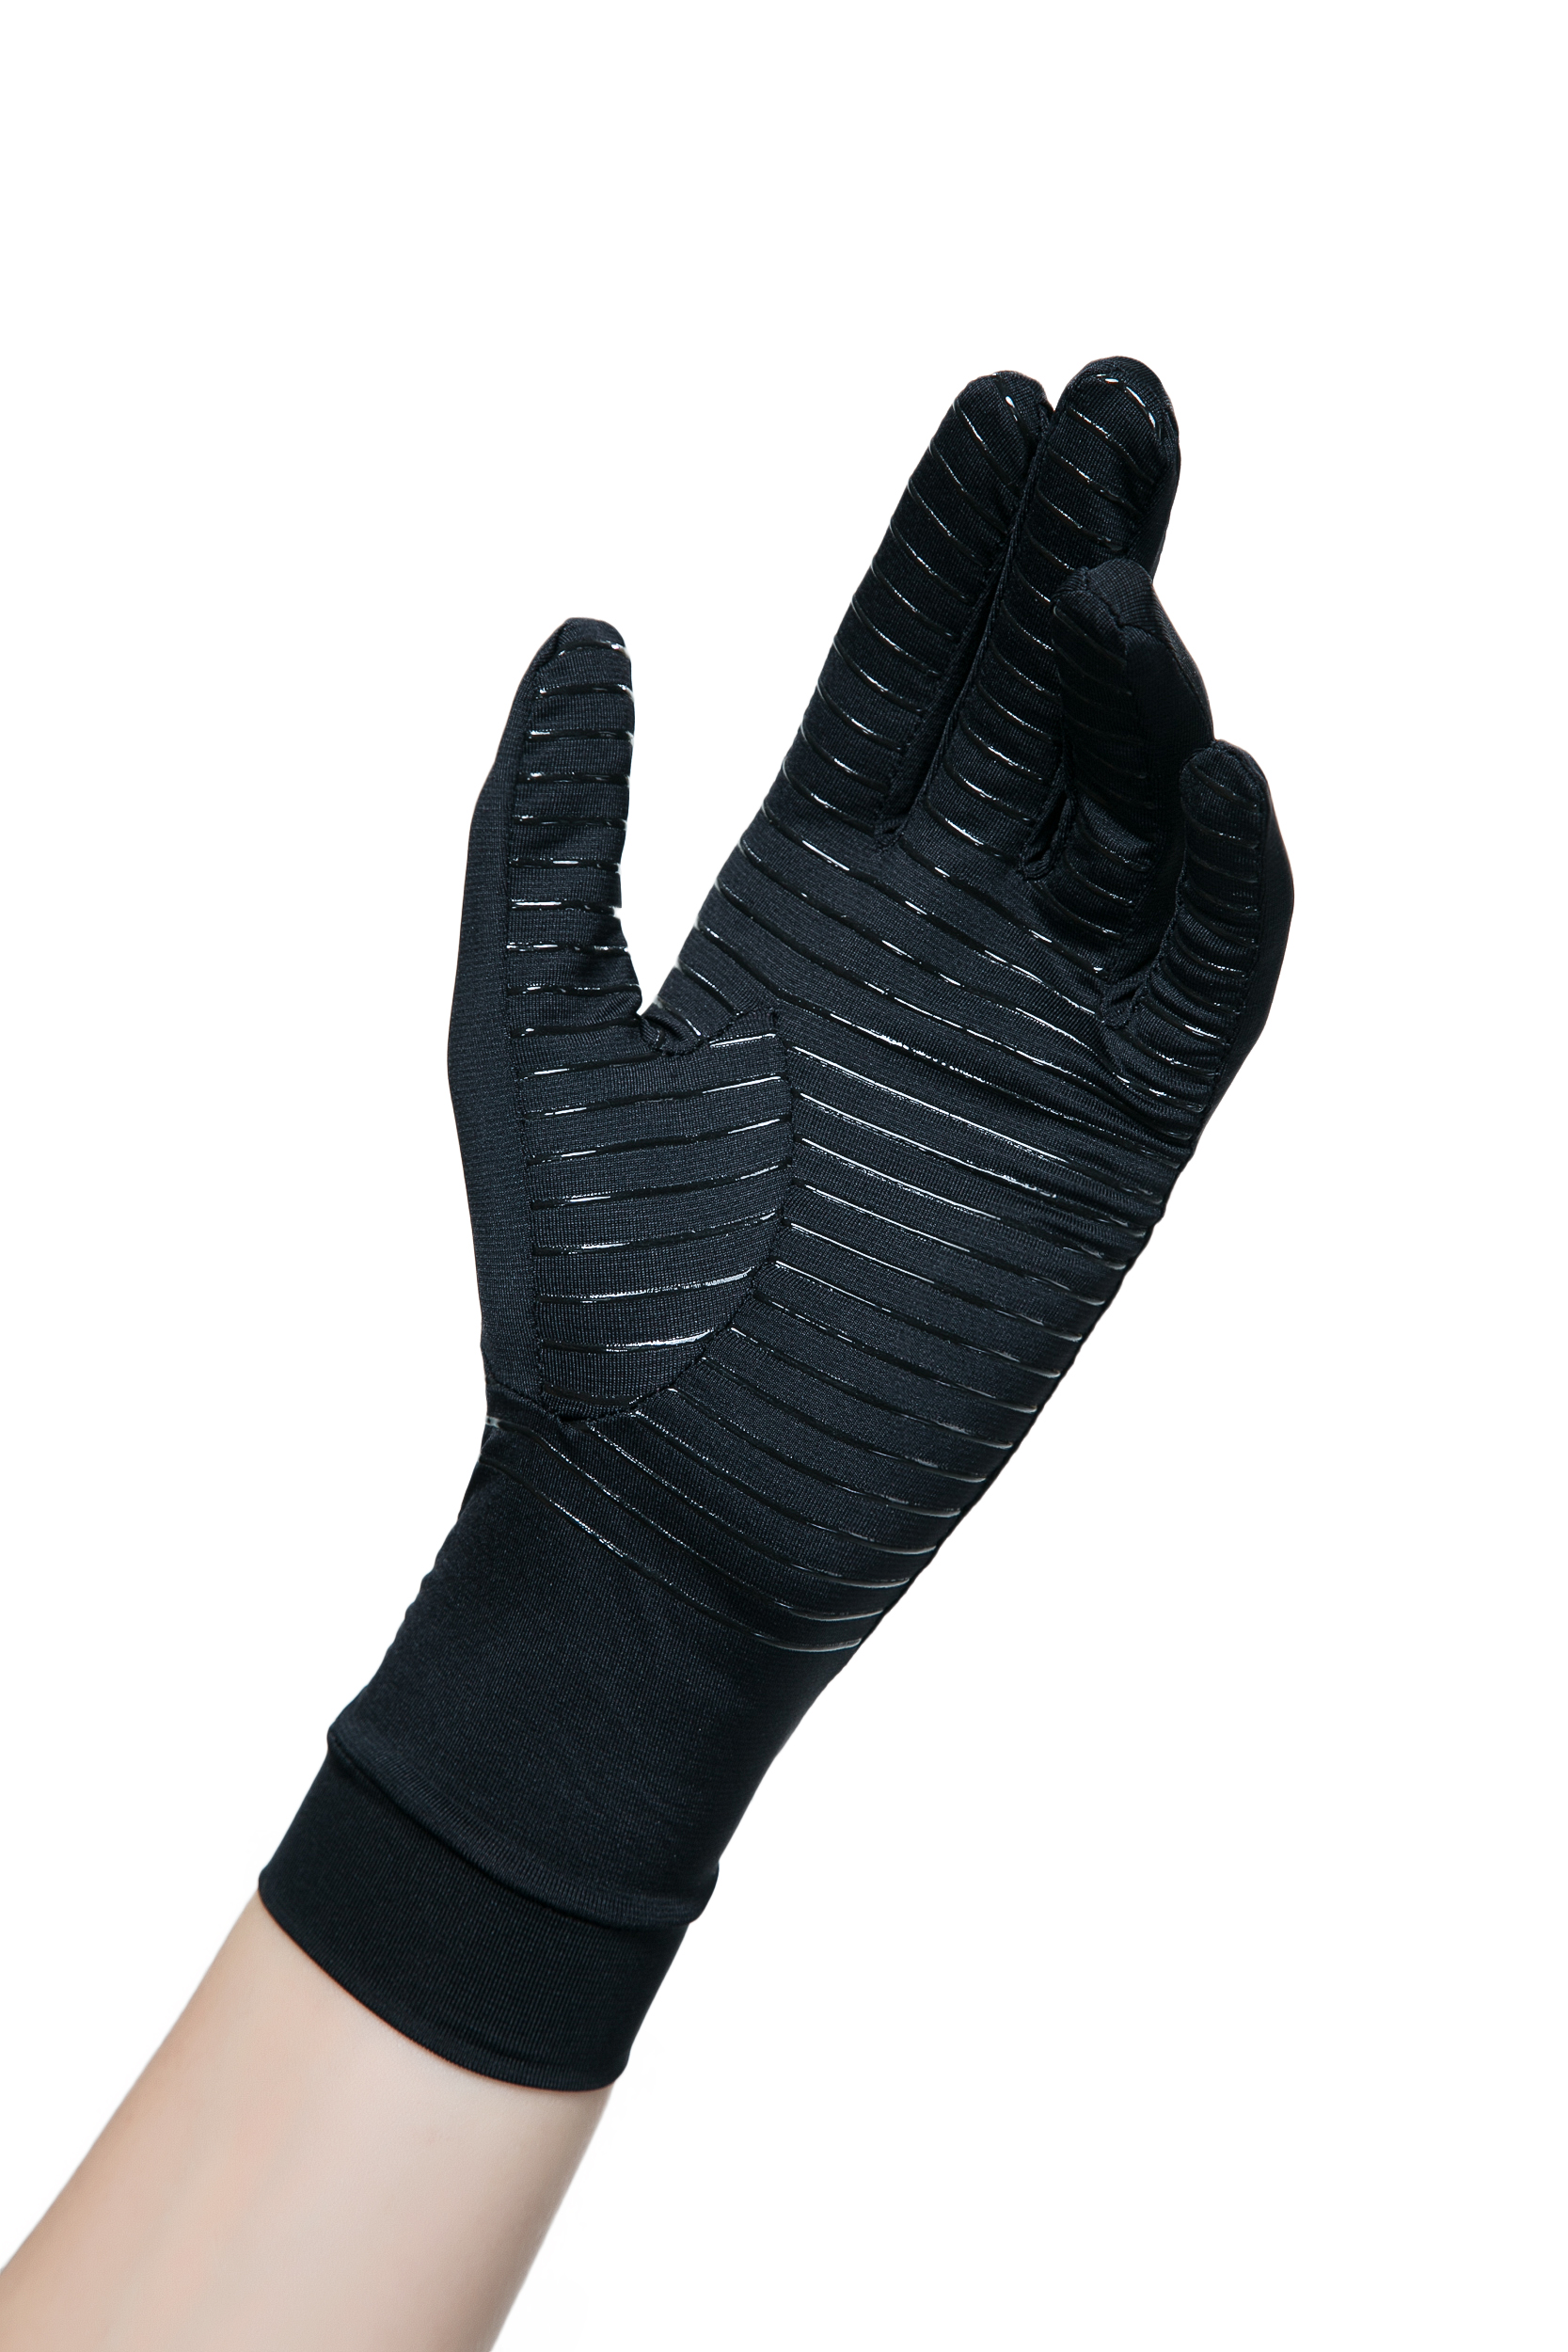 copper fit gloves